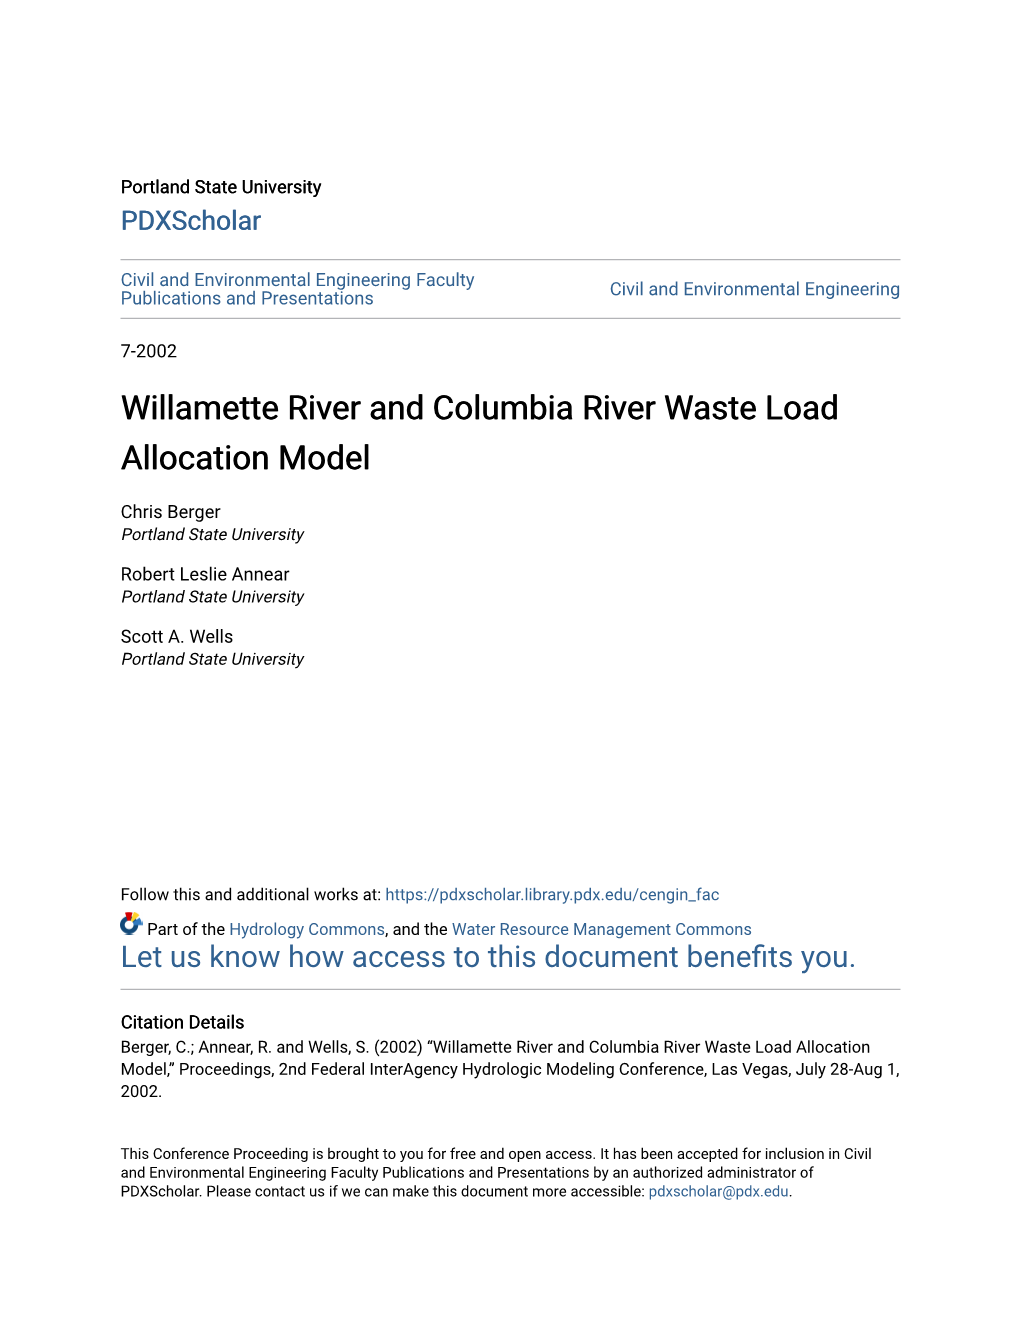 Willamette River and Columbia River Waste Load Allocation Model